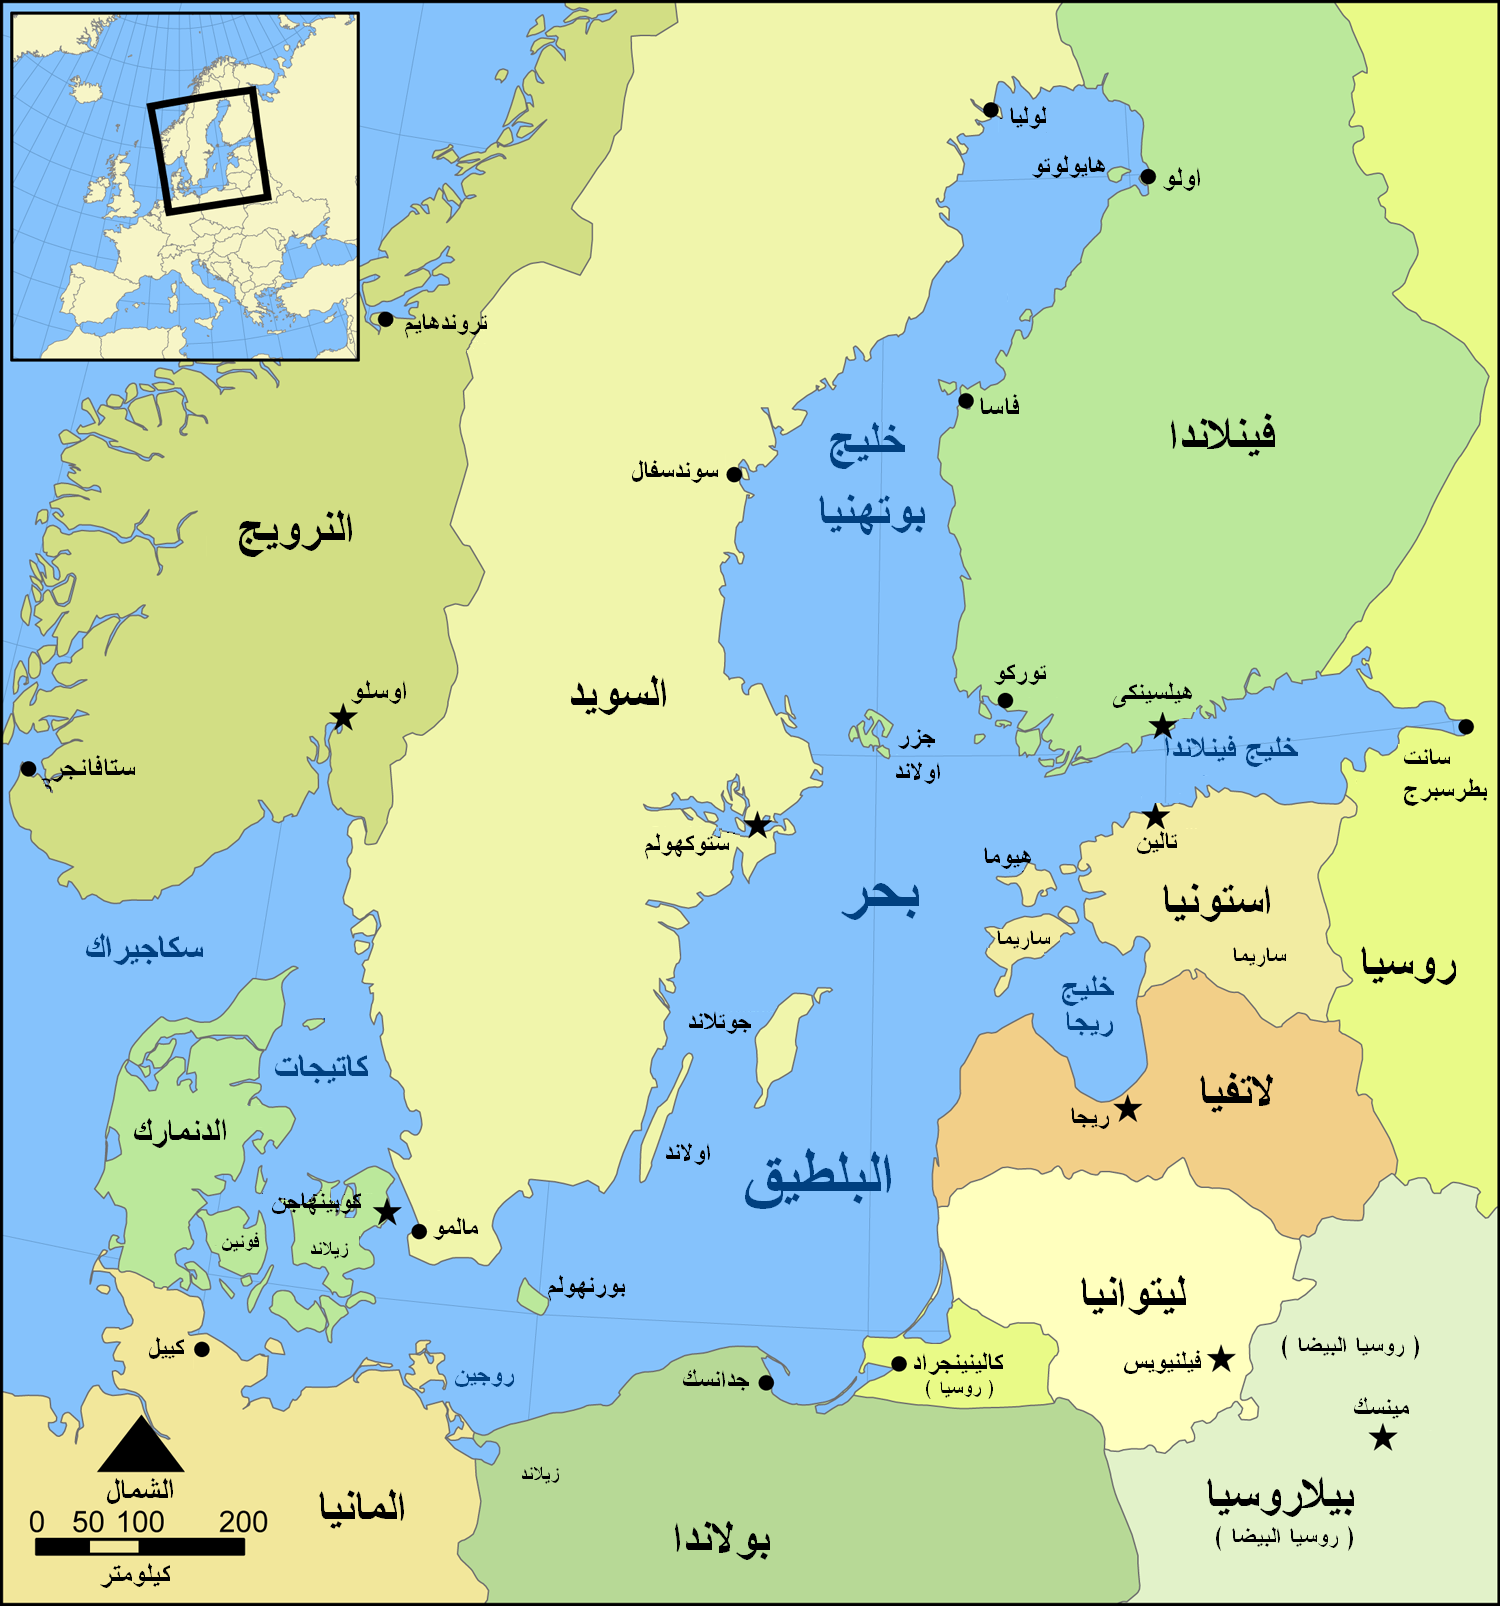 Baltic_Sea_Map-Masry.PNG